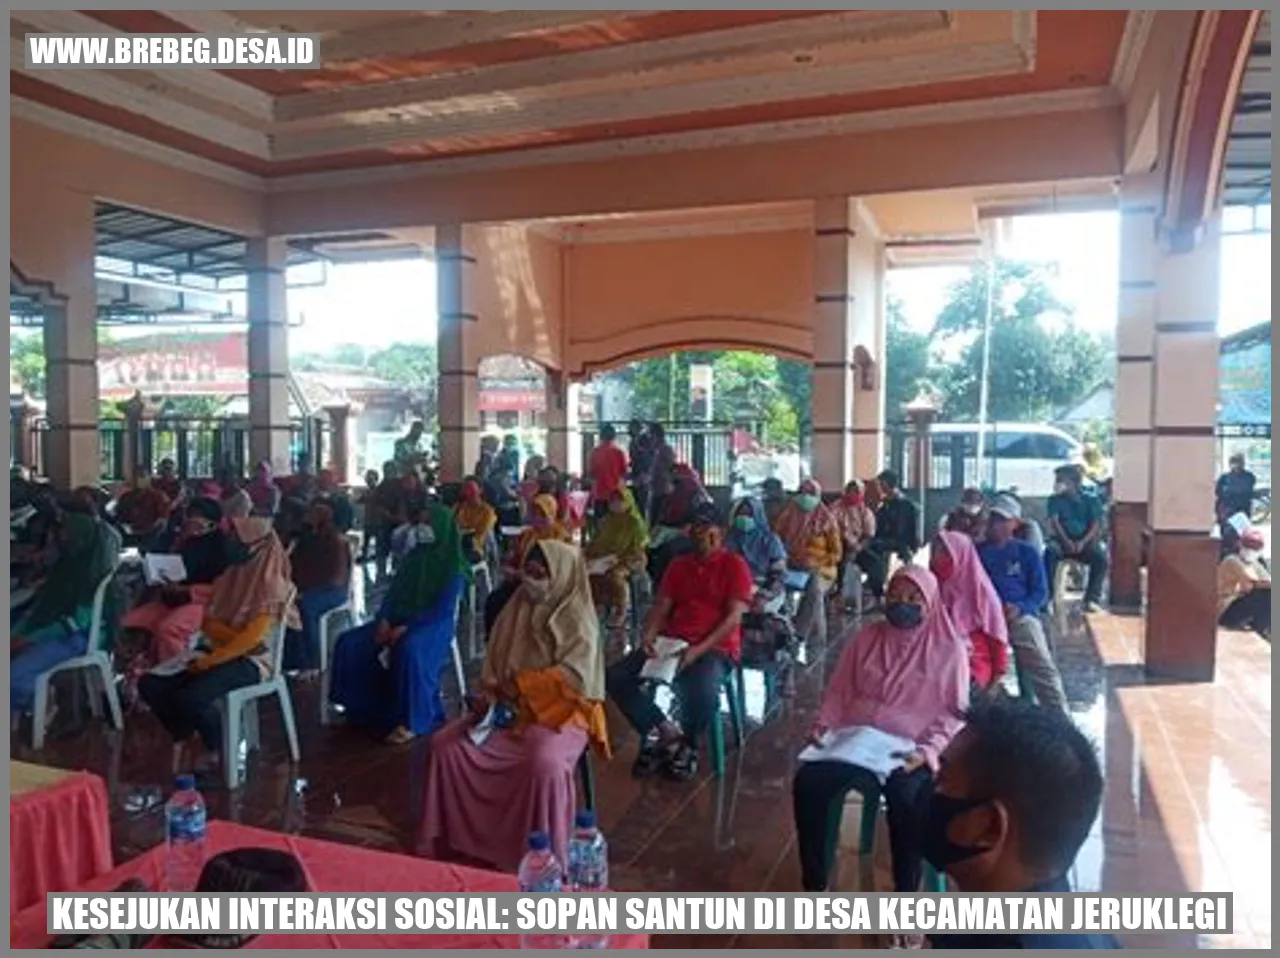 Kesejukan Interaksi Sosial: Sopan Santun di Desa Kecamatan Jeruklegi